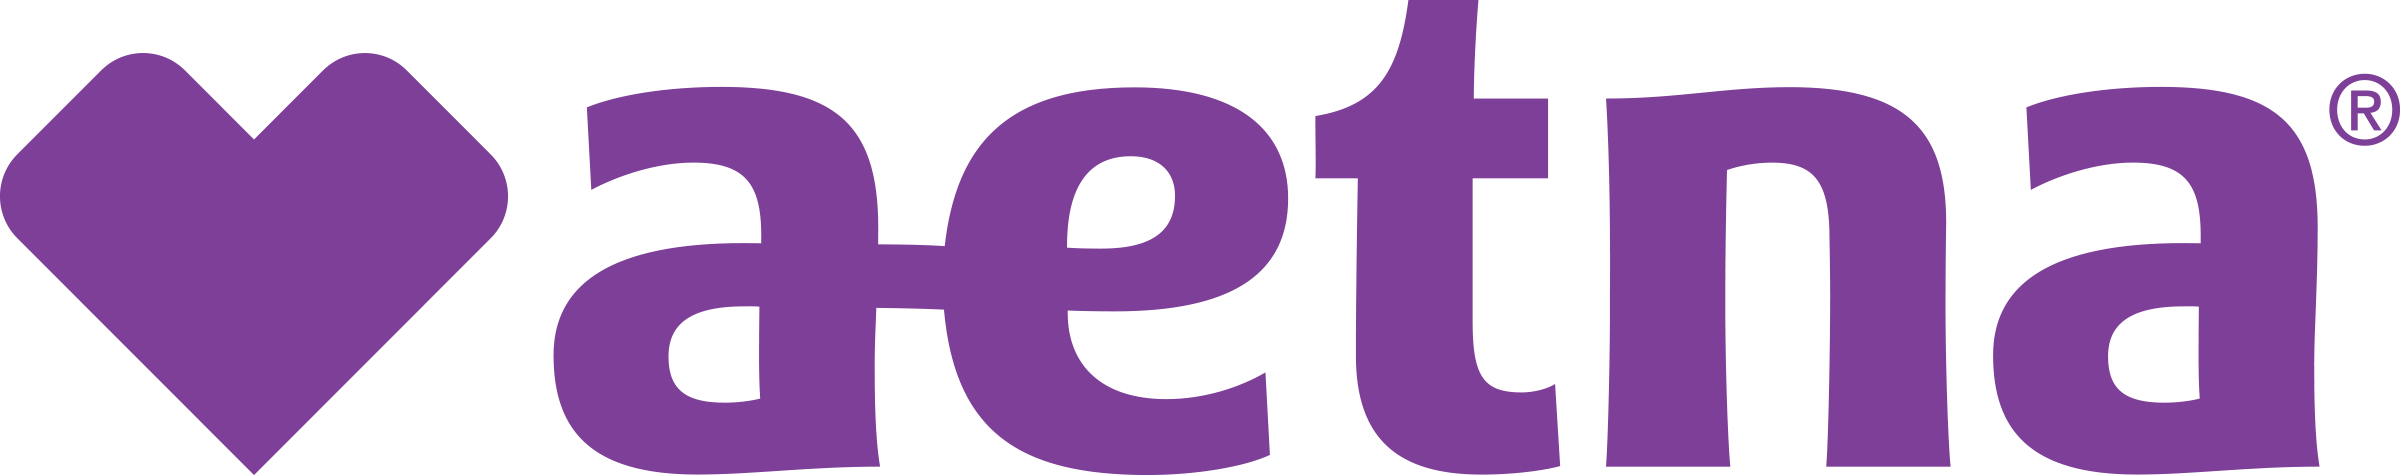 large_purple_heart_aetna_healthcare_logo